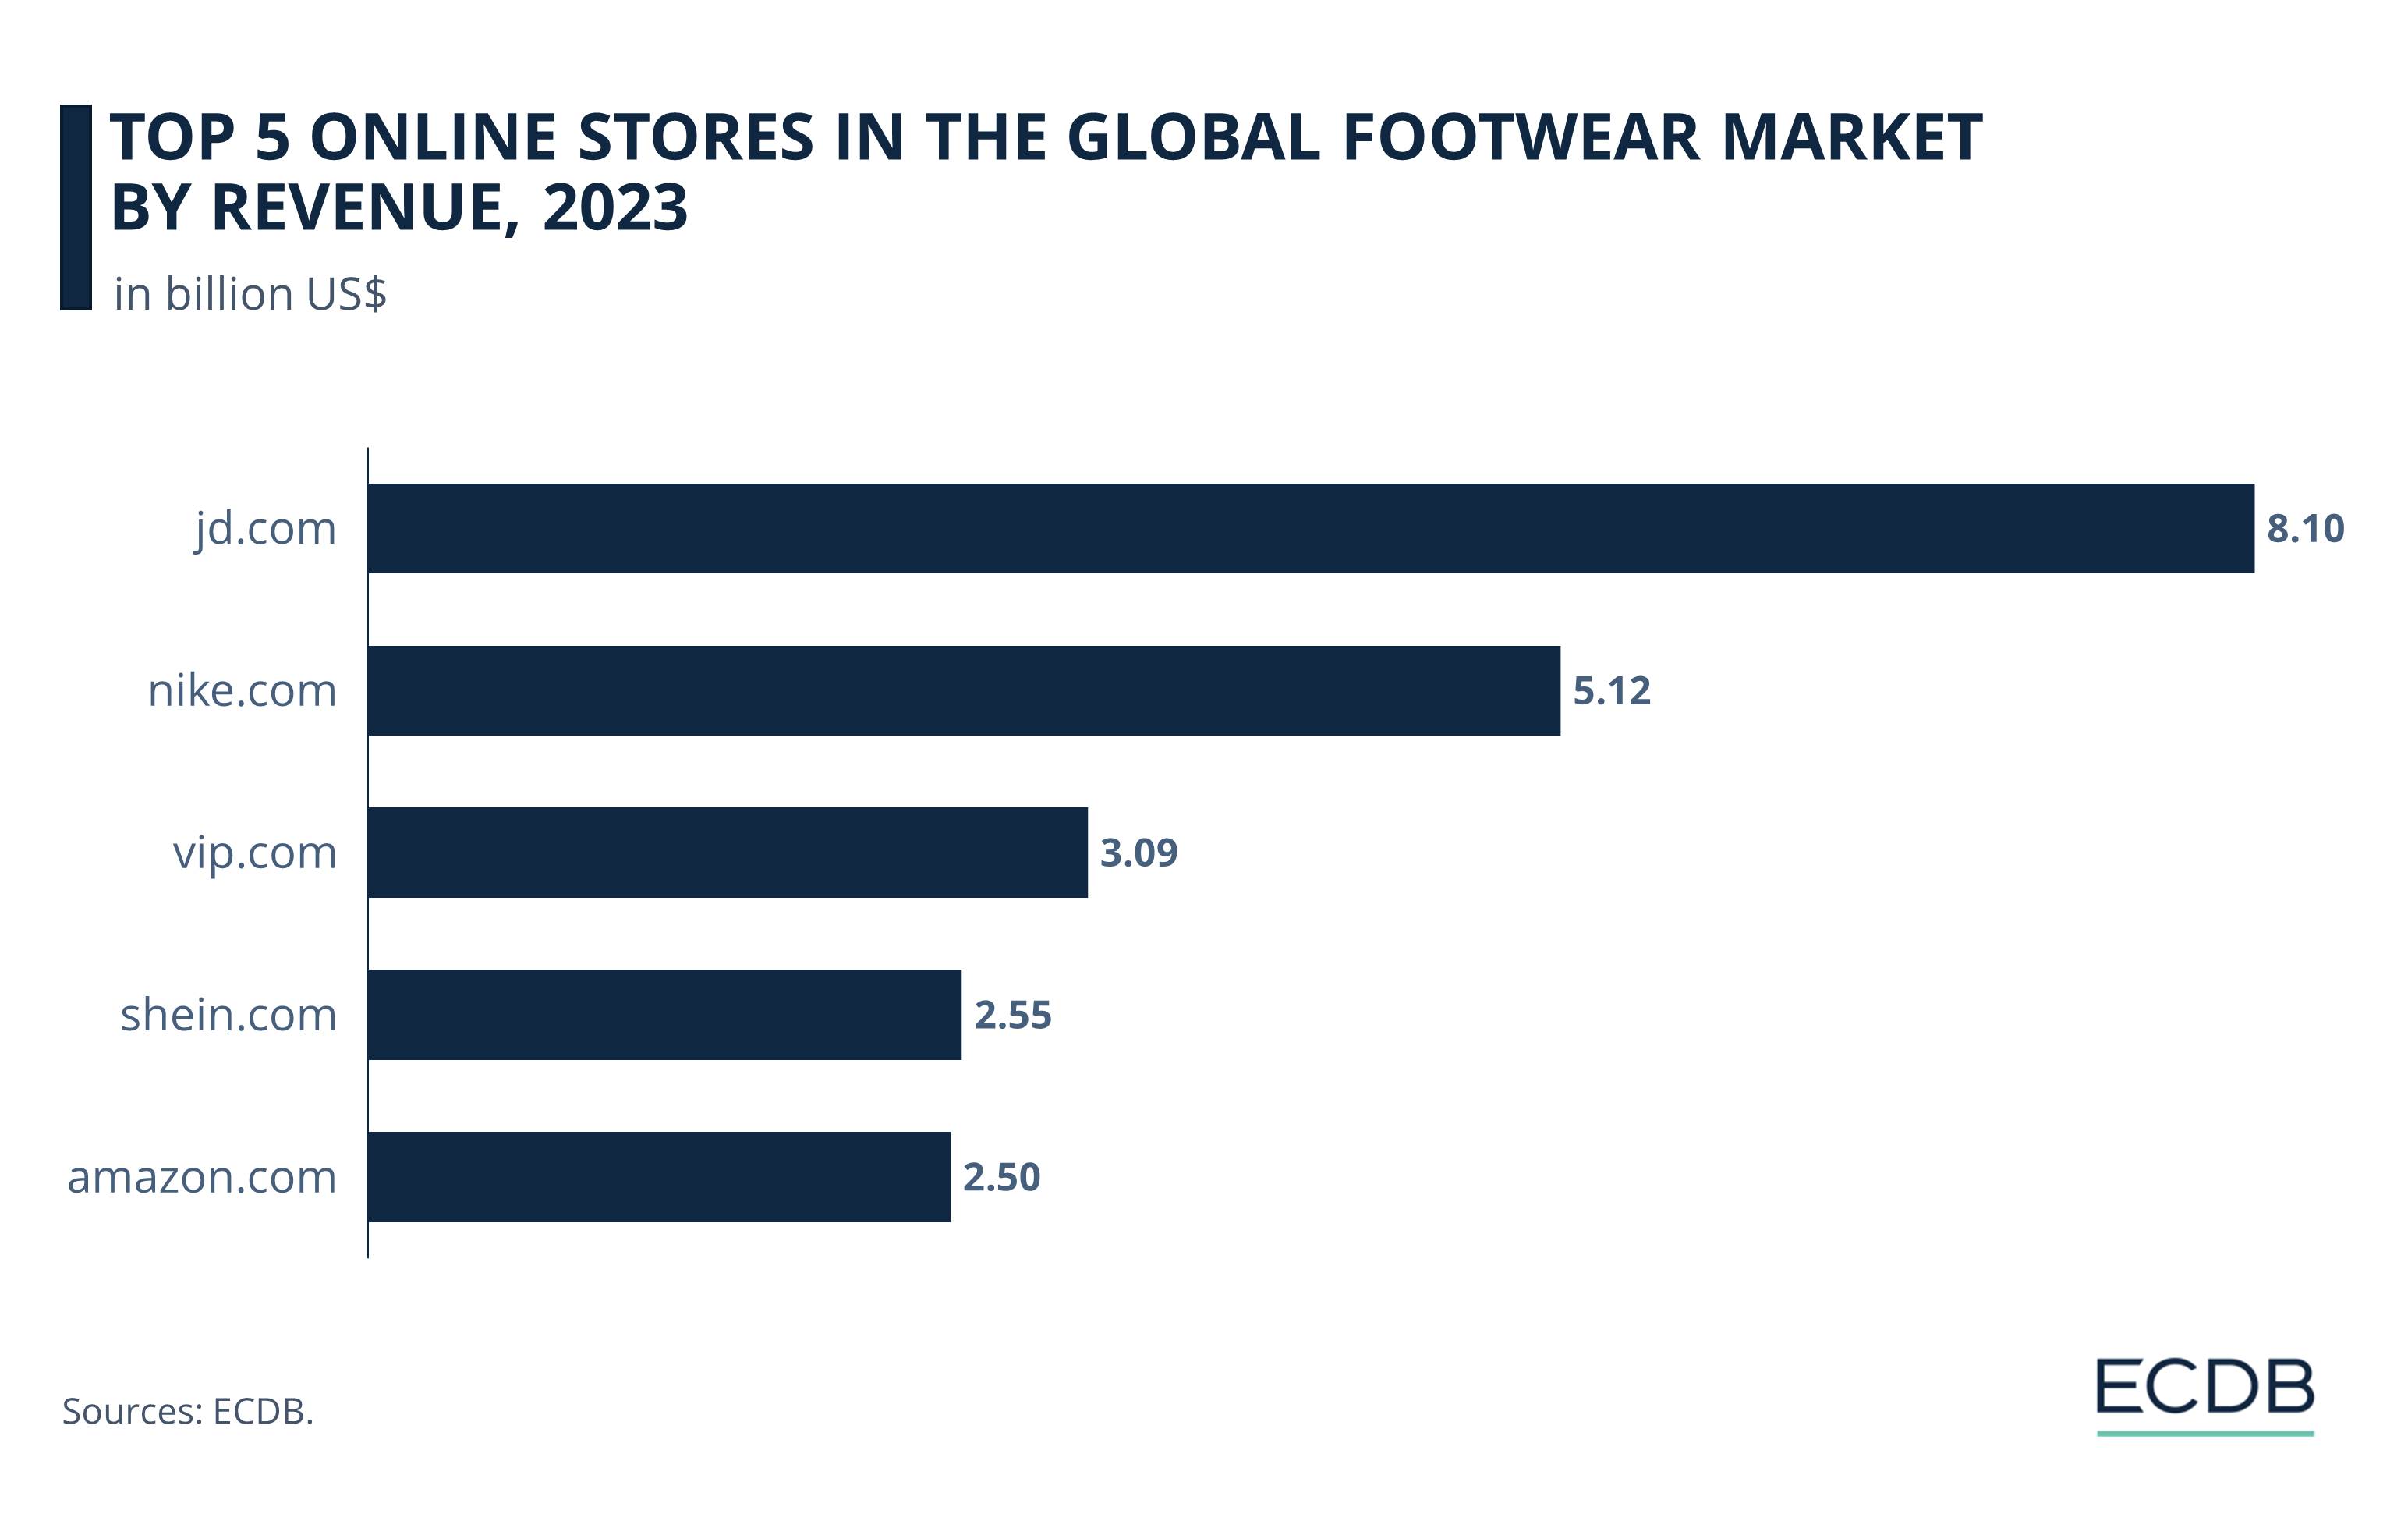 Top 5 Online Stores in the Global Footwear Market by Revenue, 2023